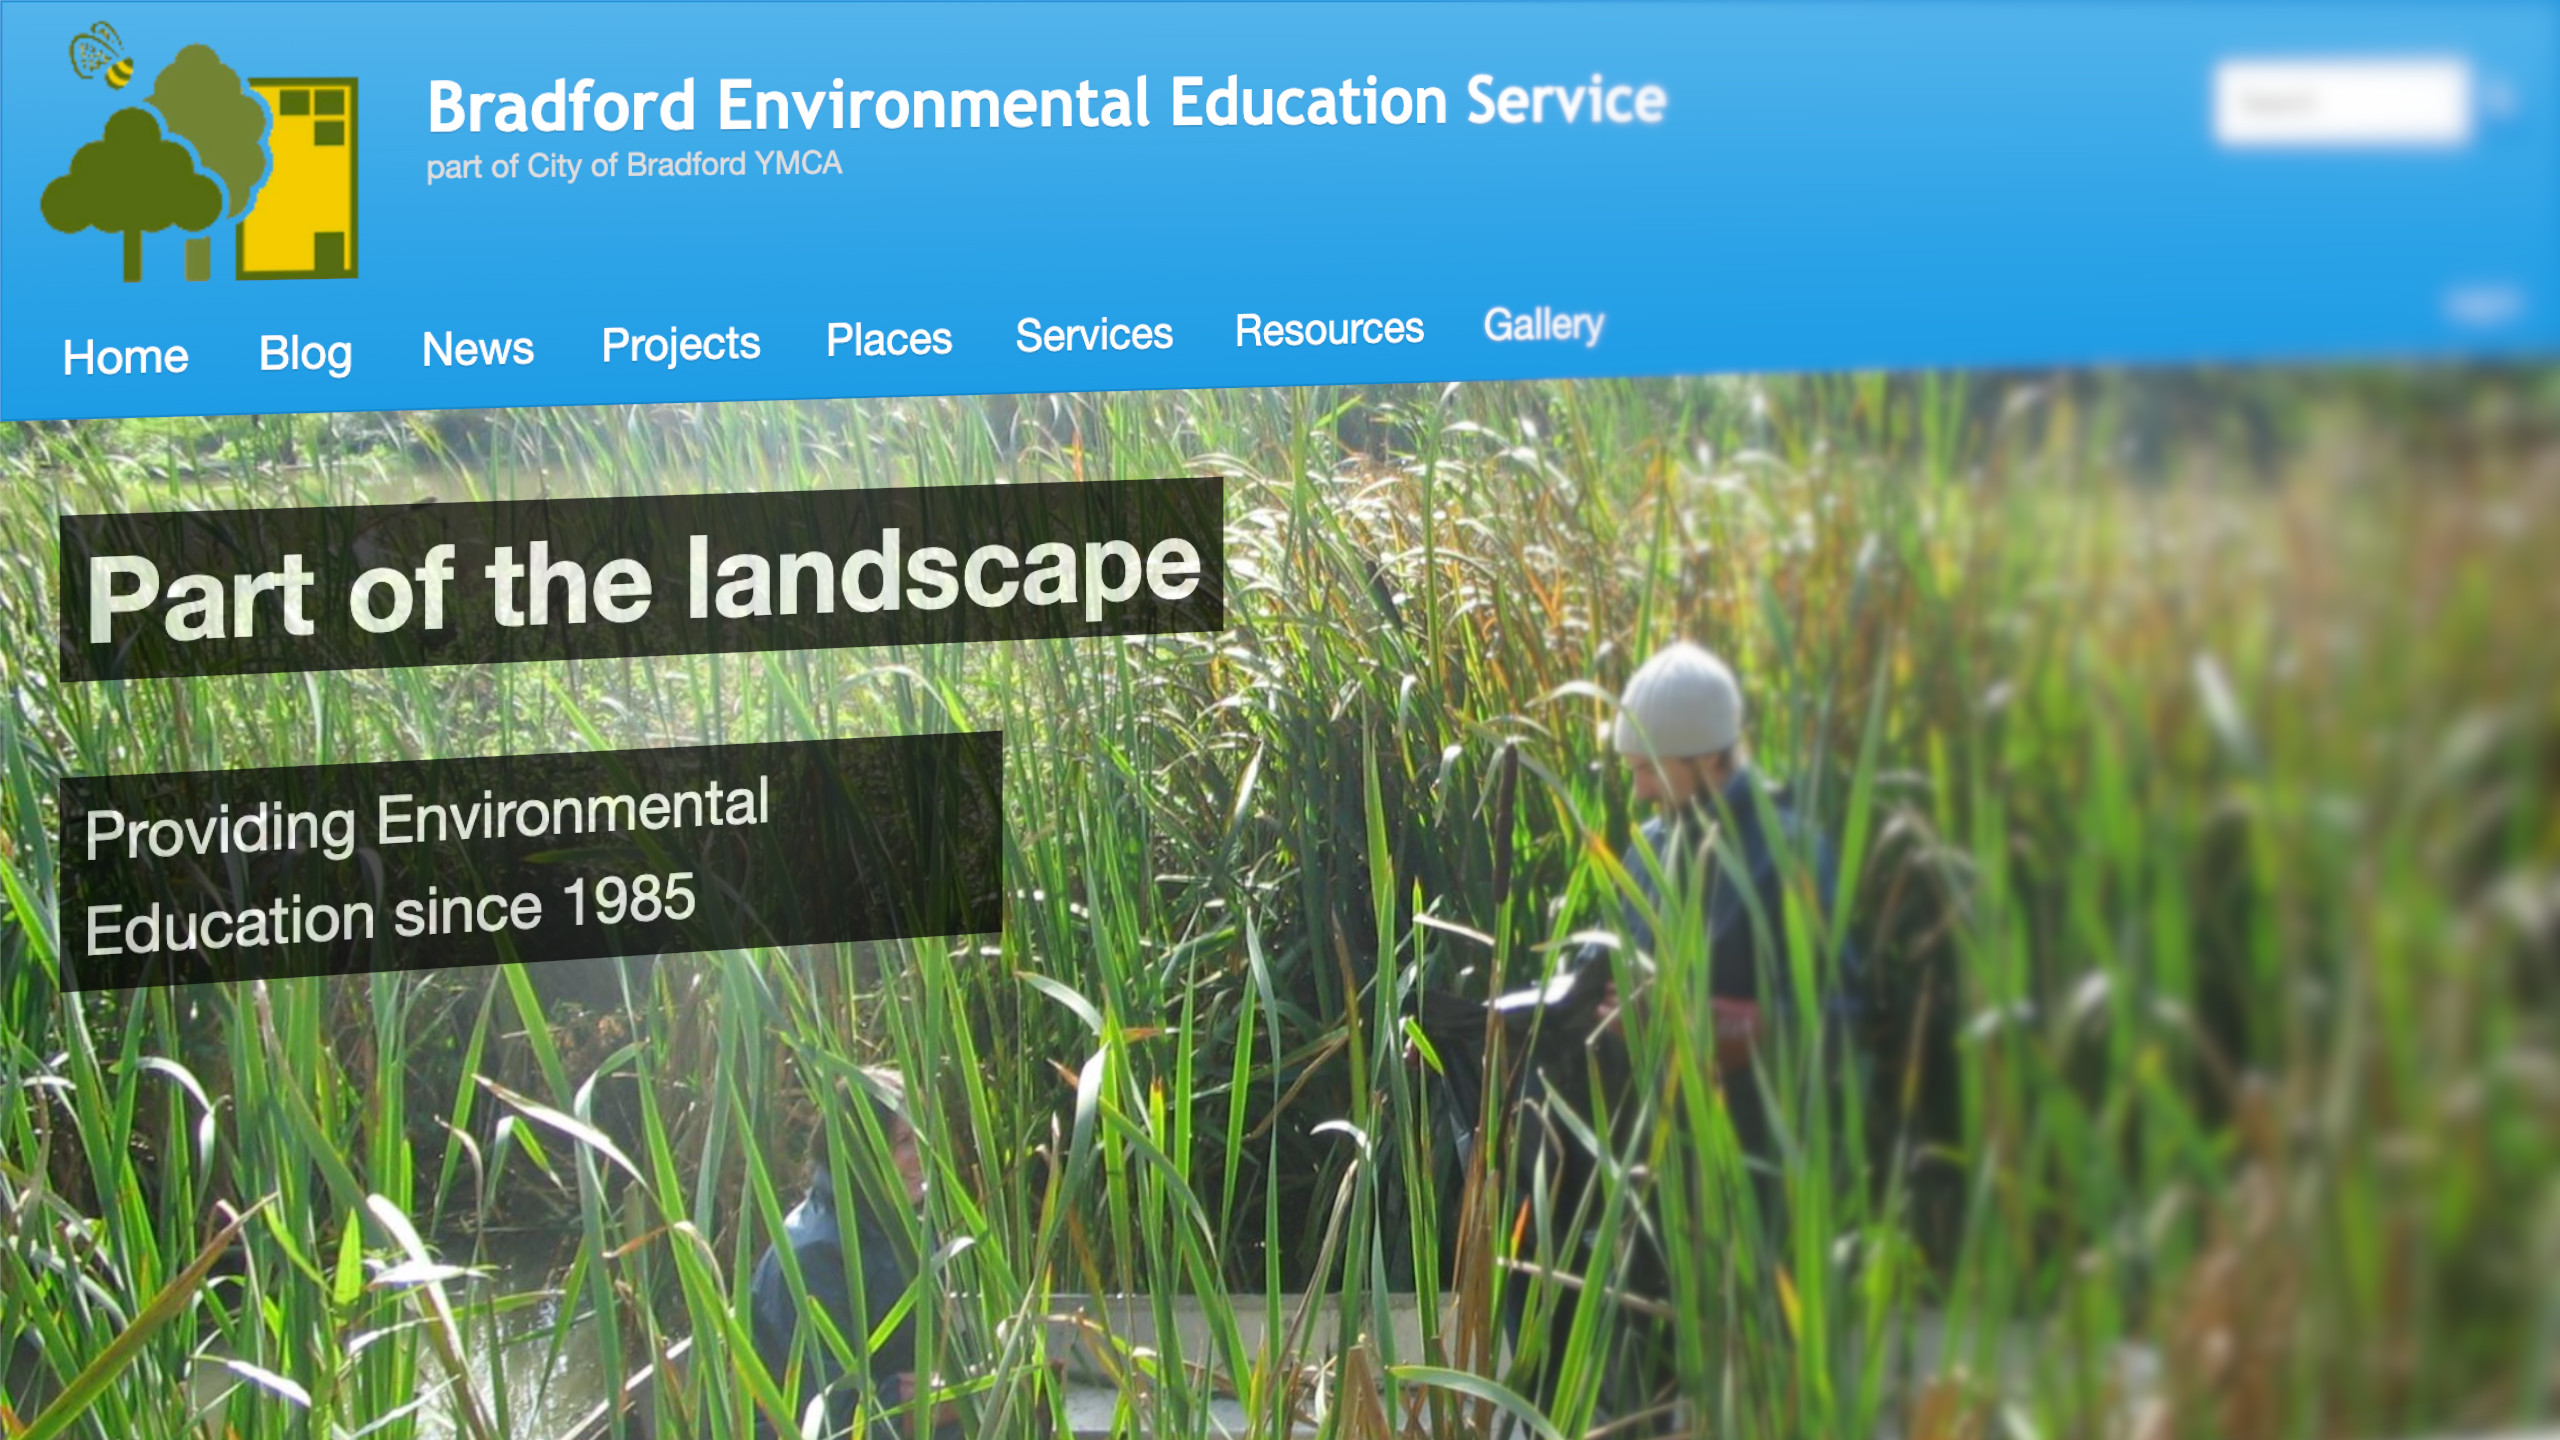 Bradford Environmental Education Services